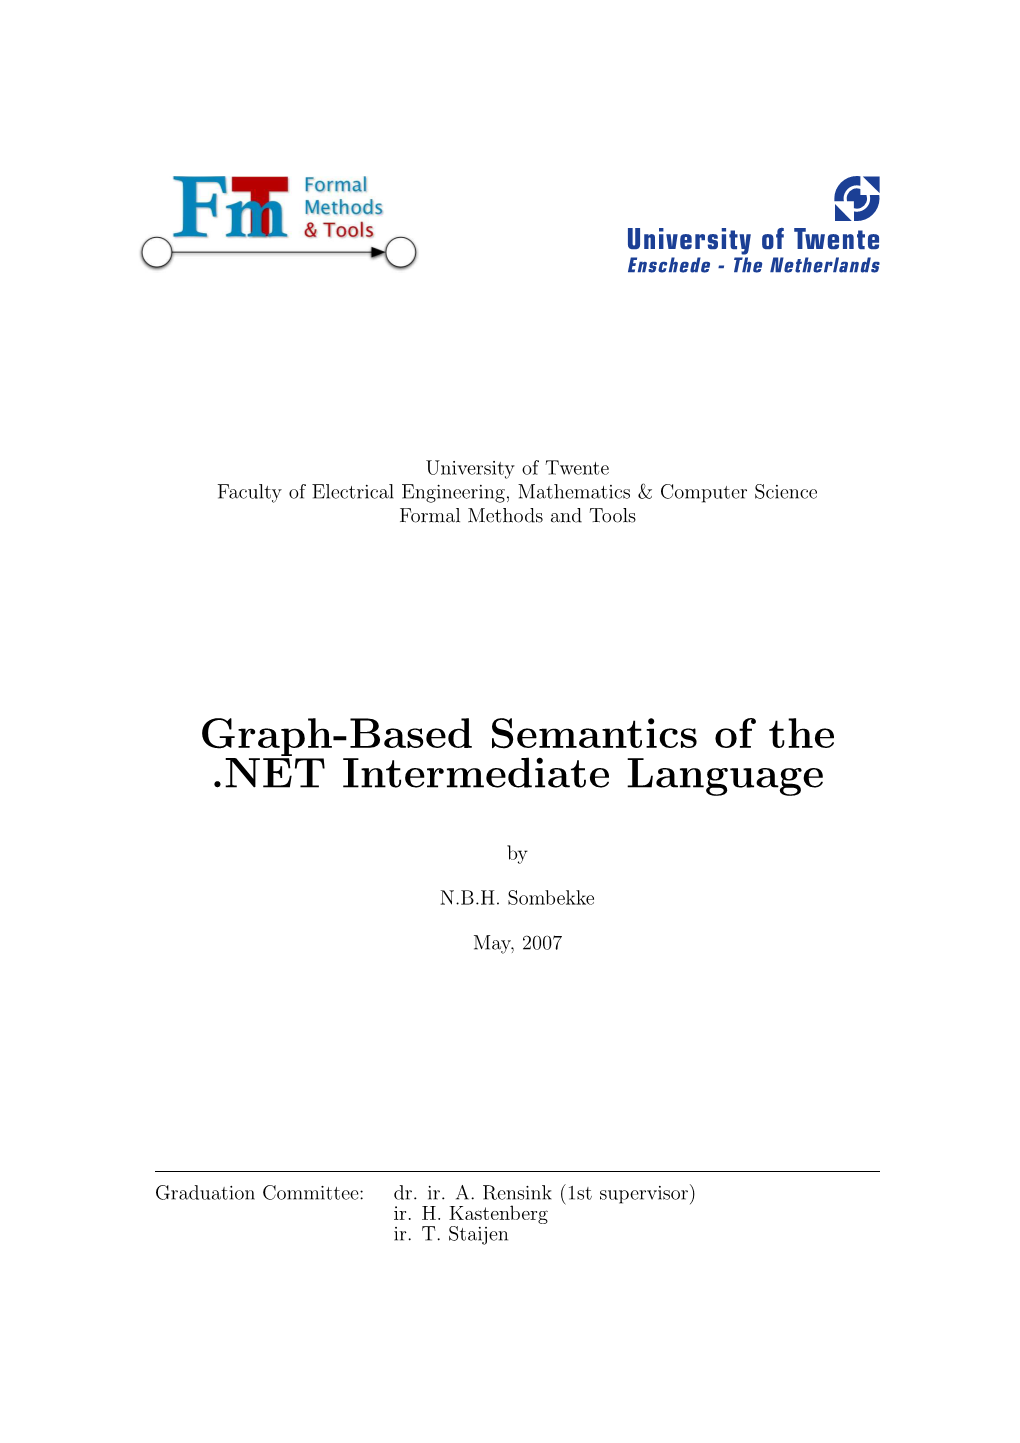 Graph-Based Semantics of the .NET Intermediate Language